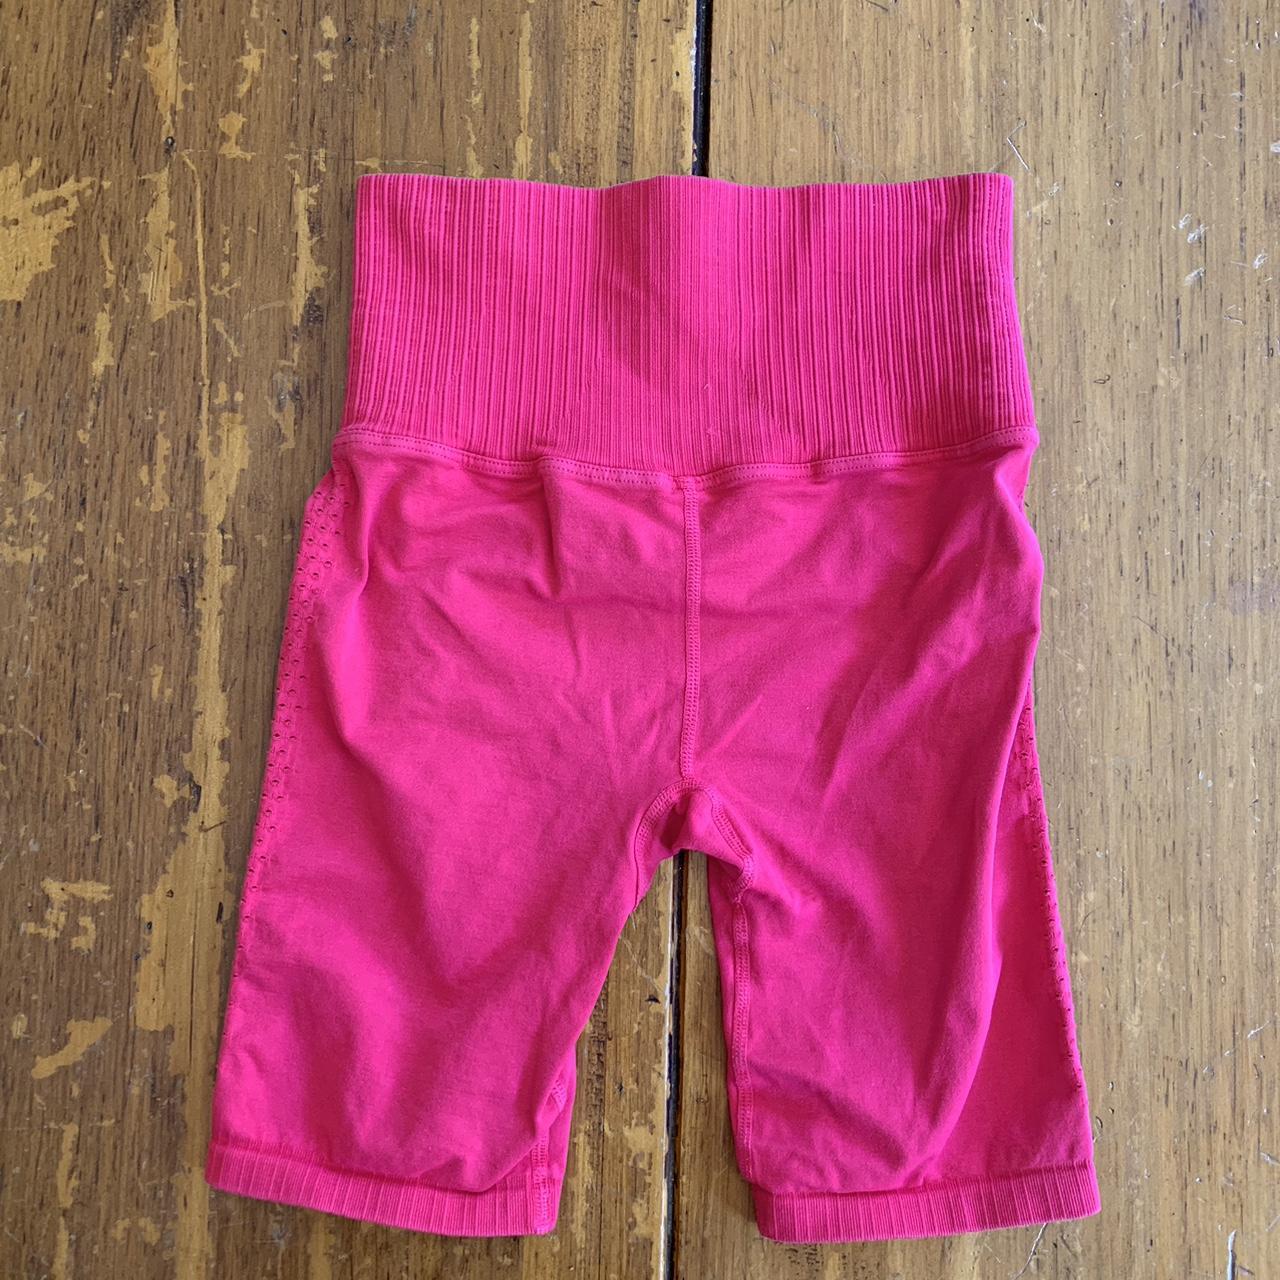 Free People Women's Shorts (3)